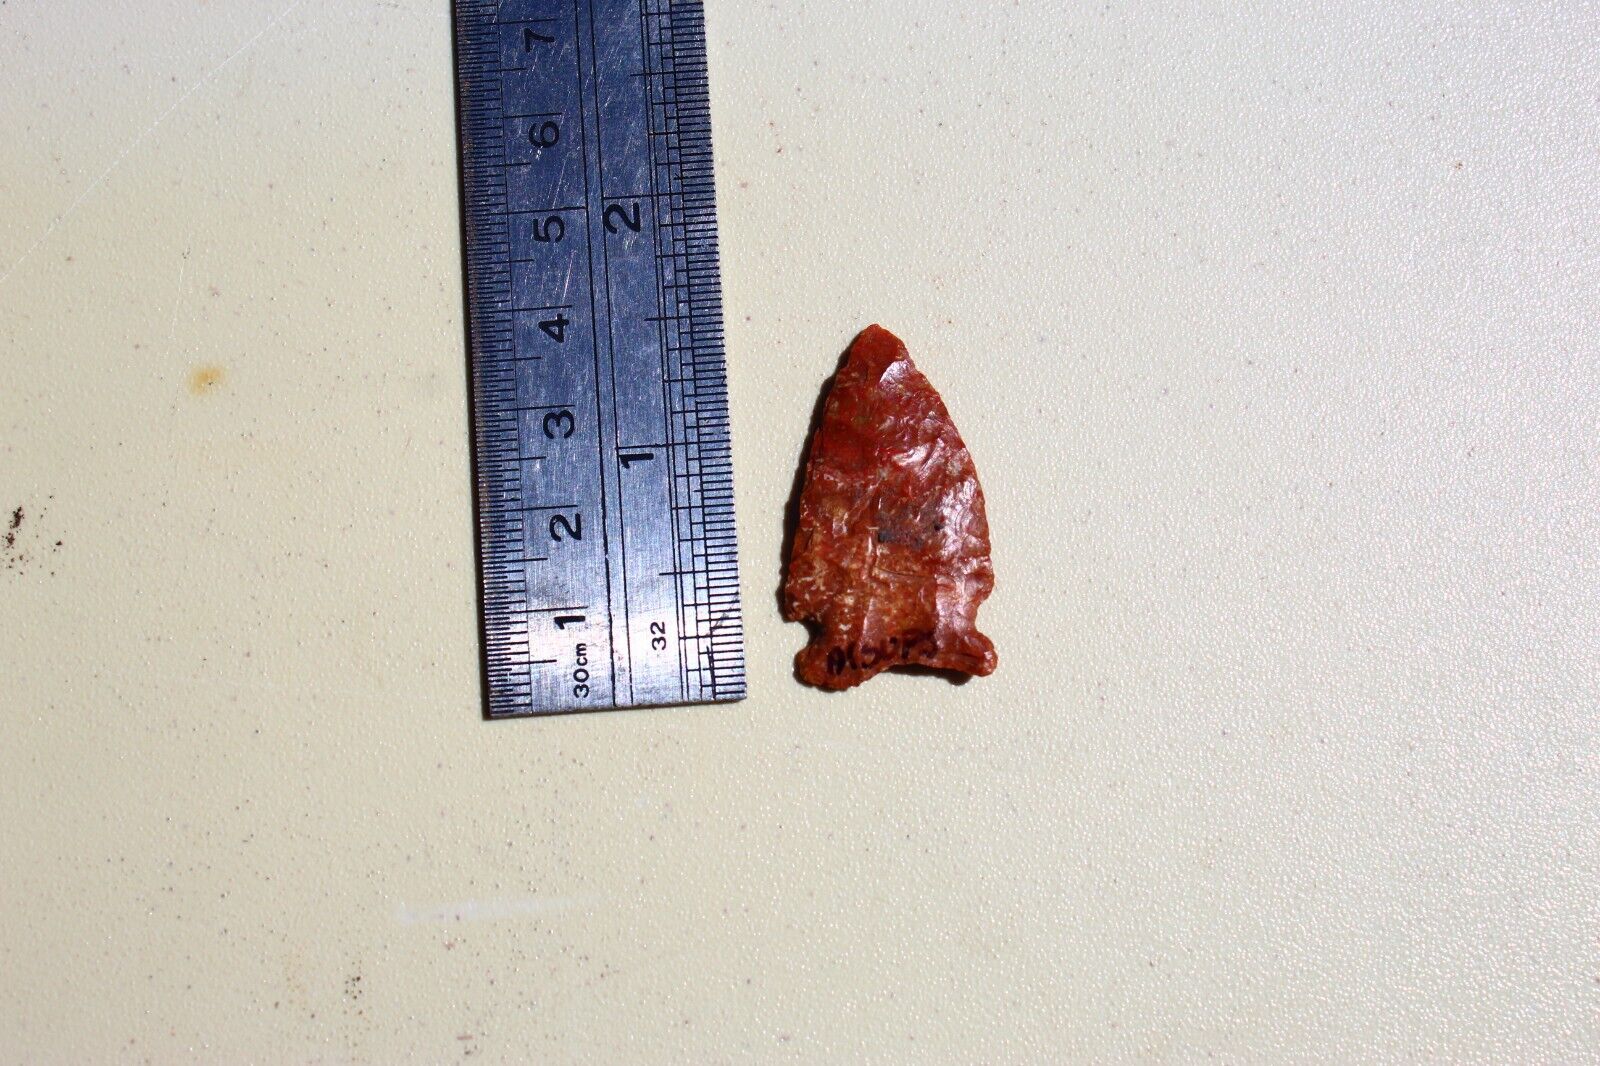 Authentic Native American Arrowhead found on a campsite in Cochran county Texas